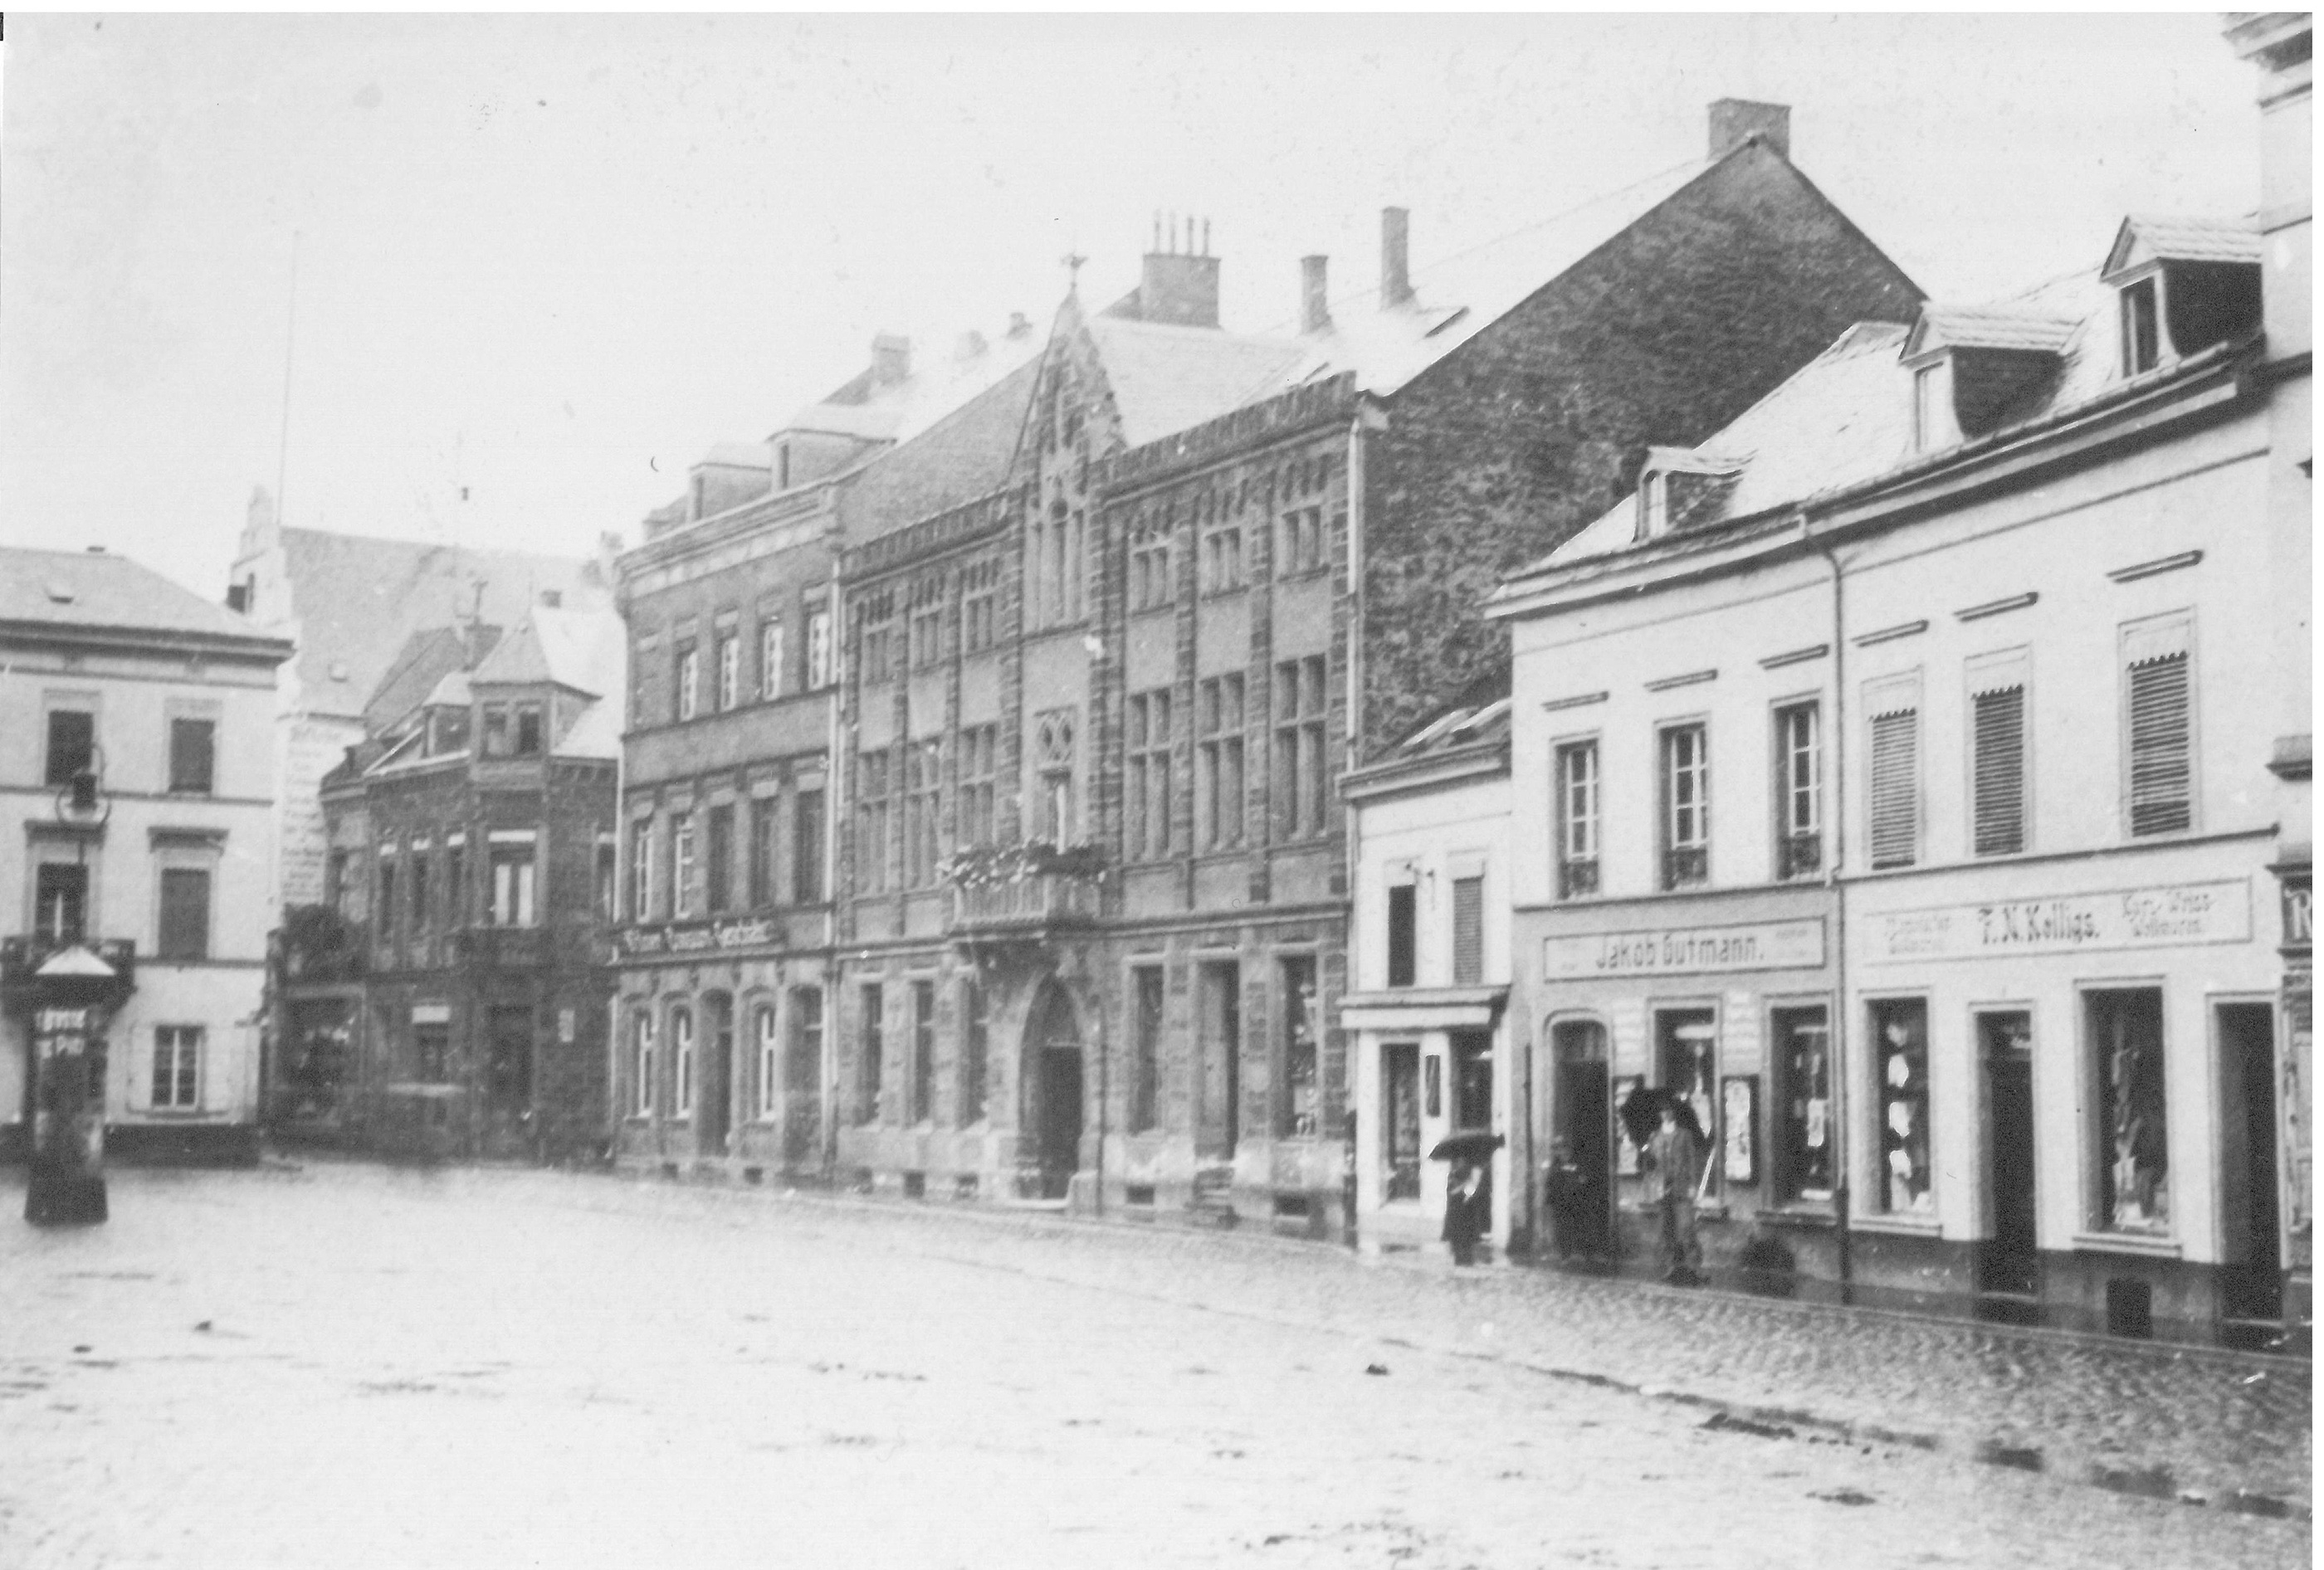 Fotografie des Andernacher Marktplatz (Stadtmuseum Andernach CC BY-NC-SA)